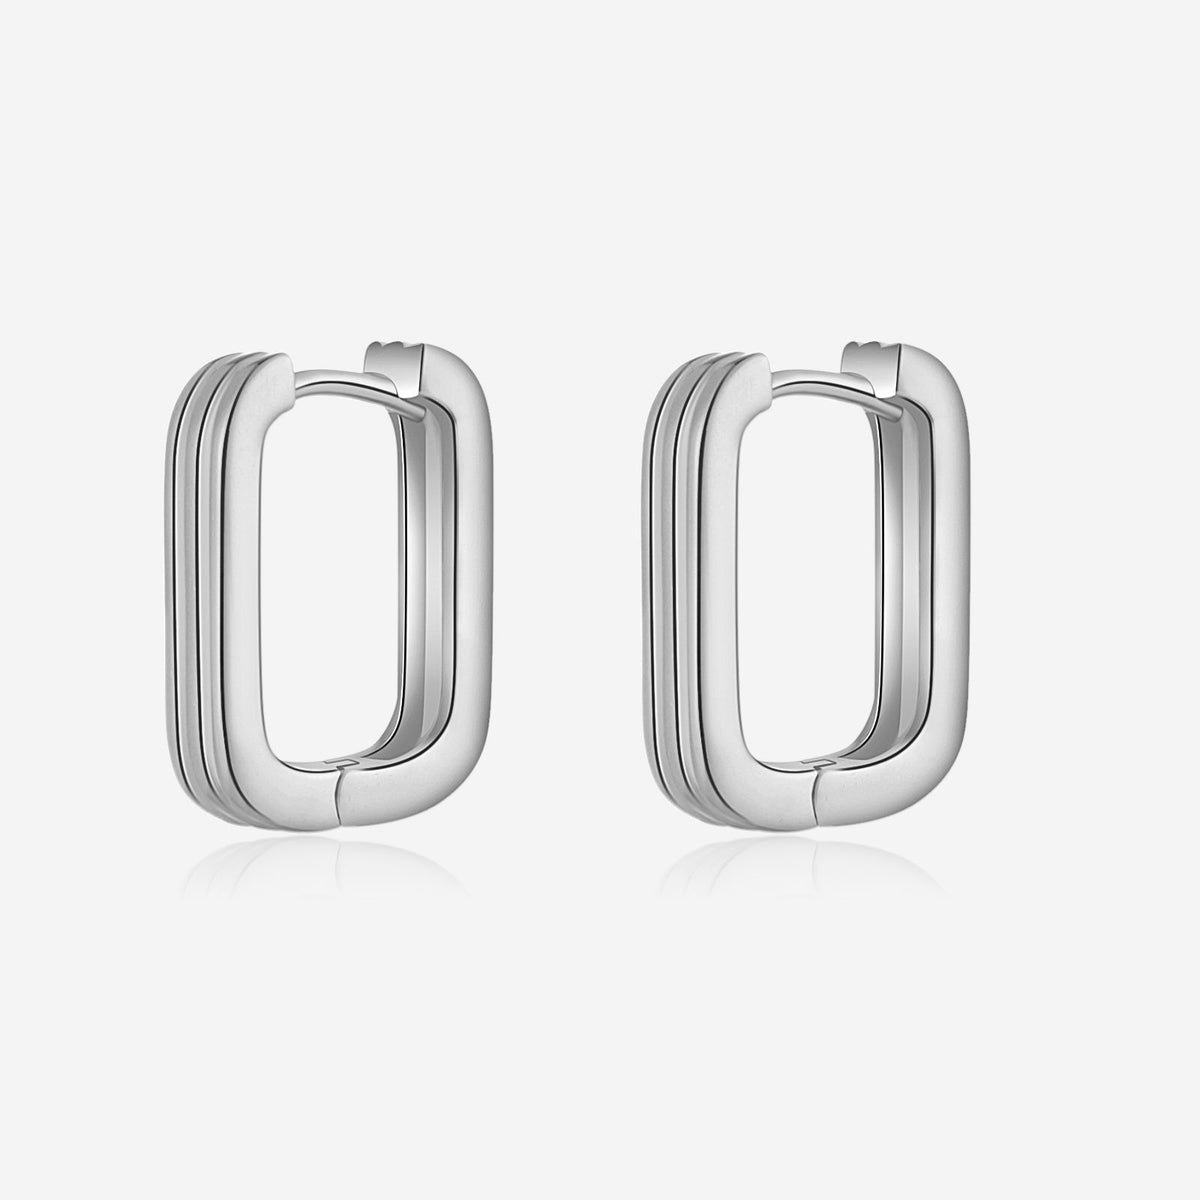 New Simple And Versatile S925 Silver Rectangular Geometric Earrings